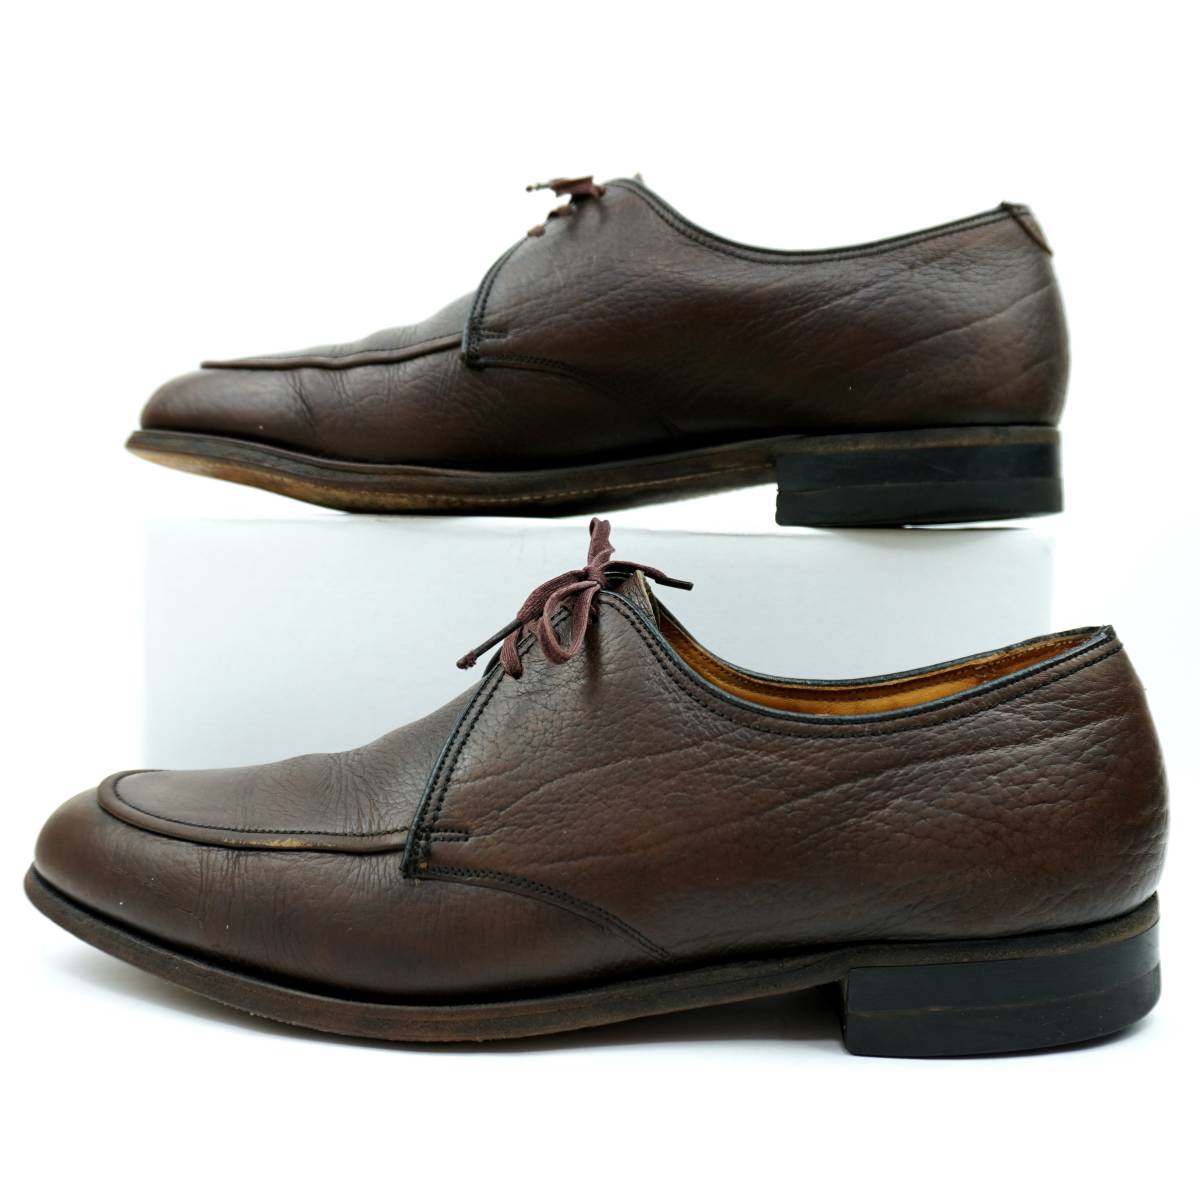 FLORSHEIM THE CHEVRON 1965s US9.0D Vintage フローシャイム シェブロン ユーチップ 革靴 1960年代 ヴィンテージ 27.0cm 古靴_画像3